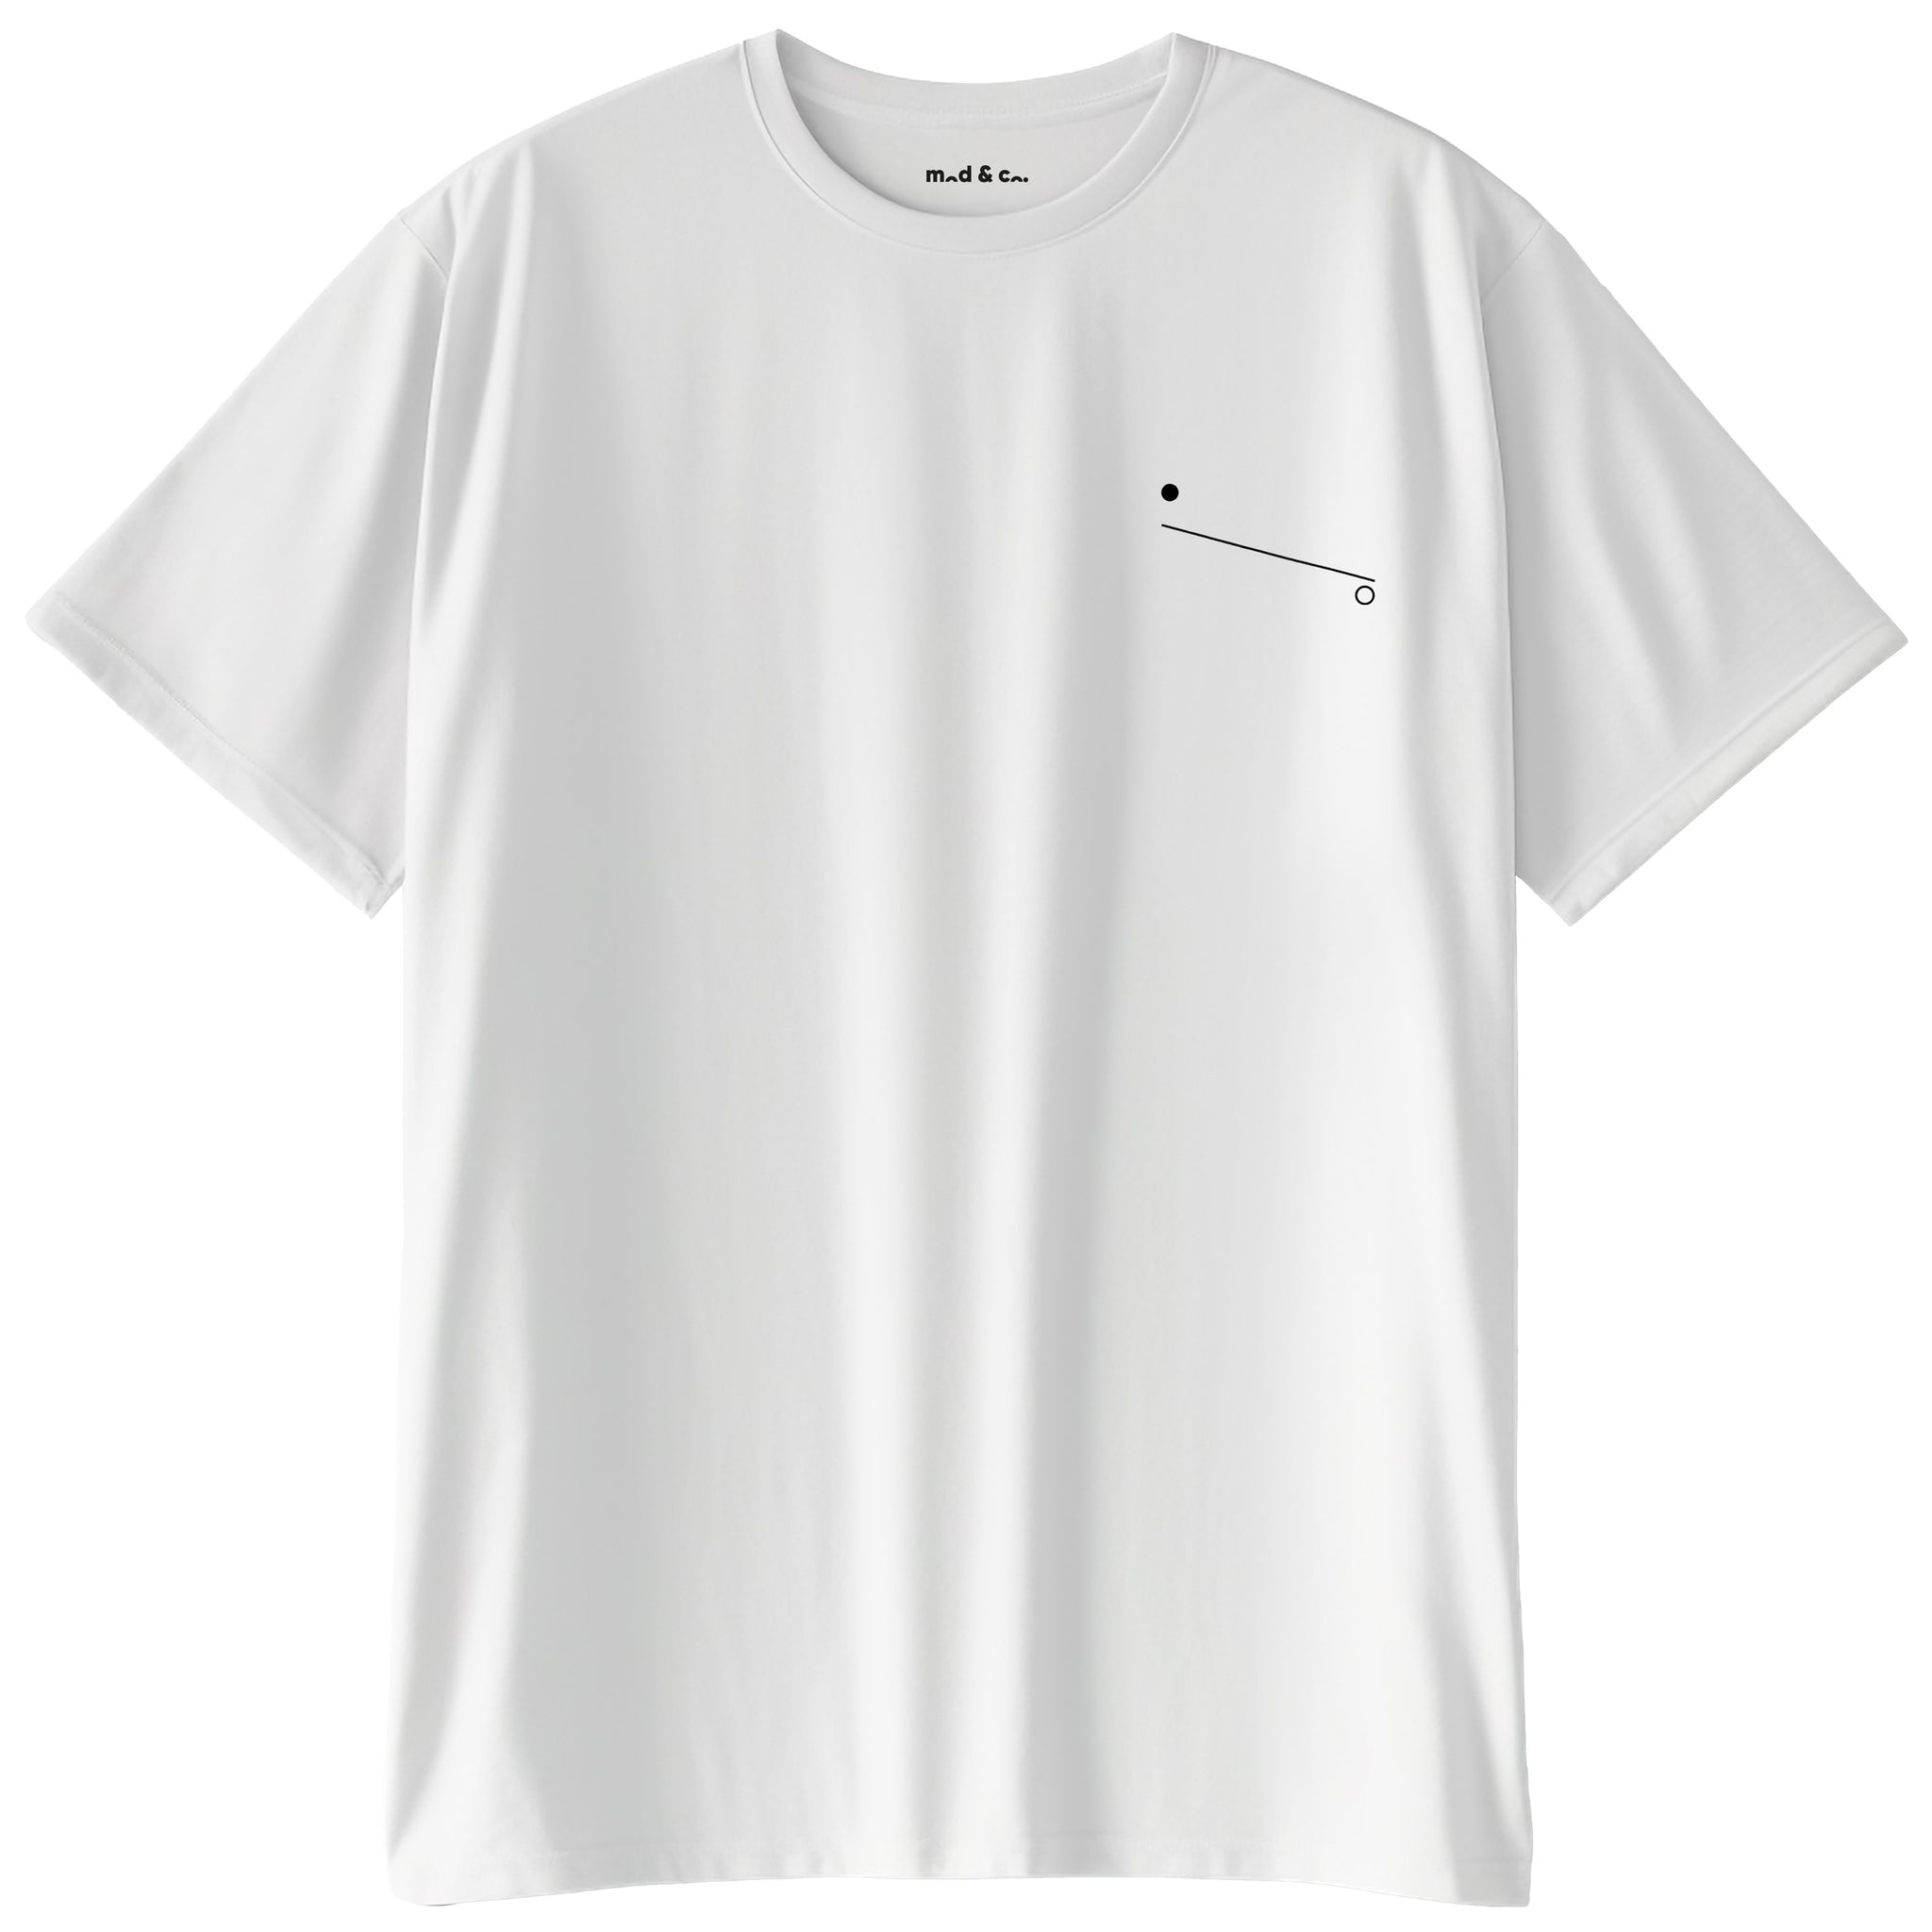 Balance Oversize T-Shirt